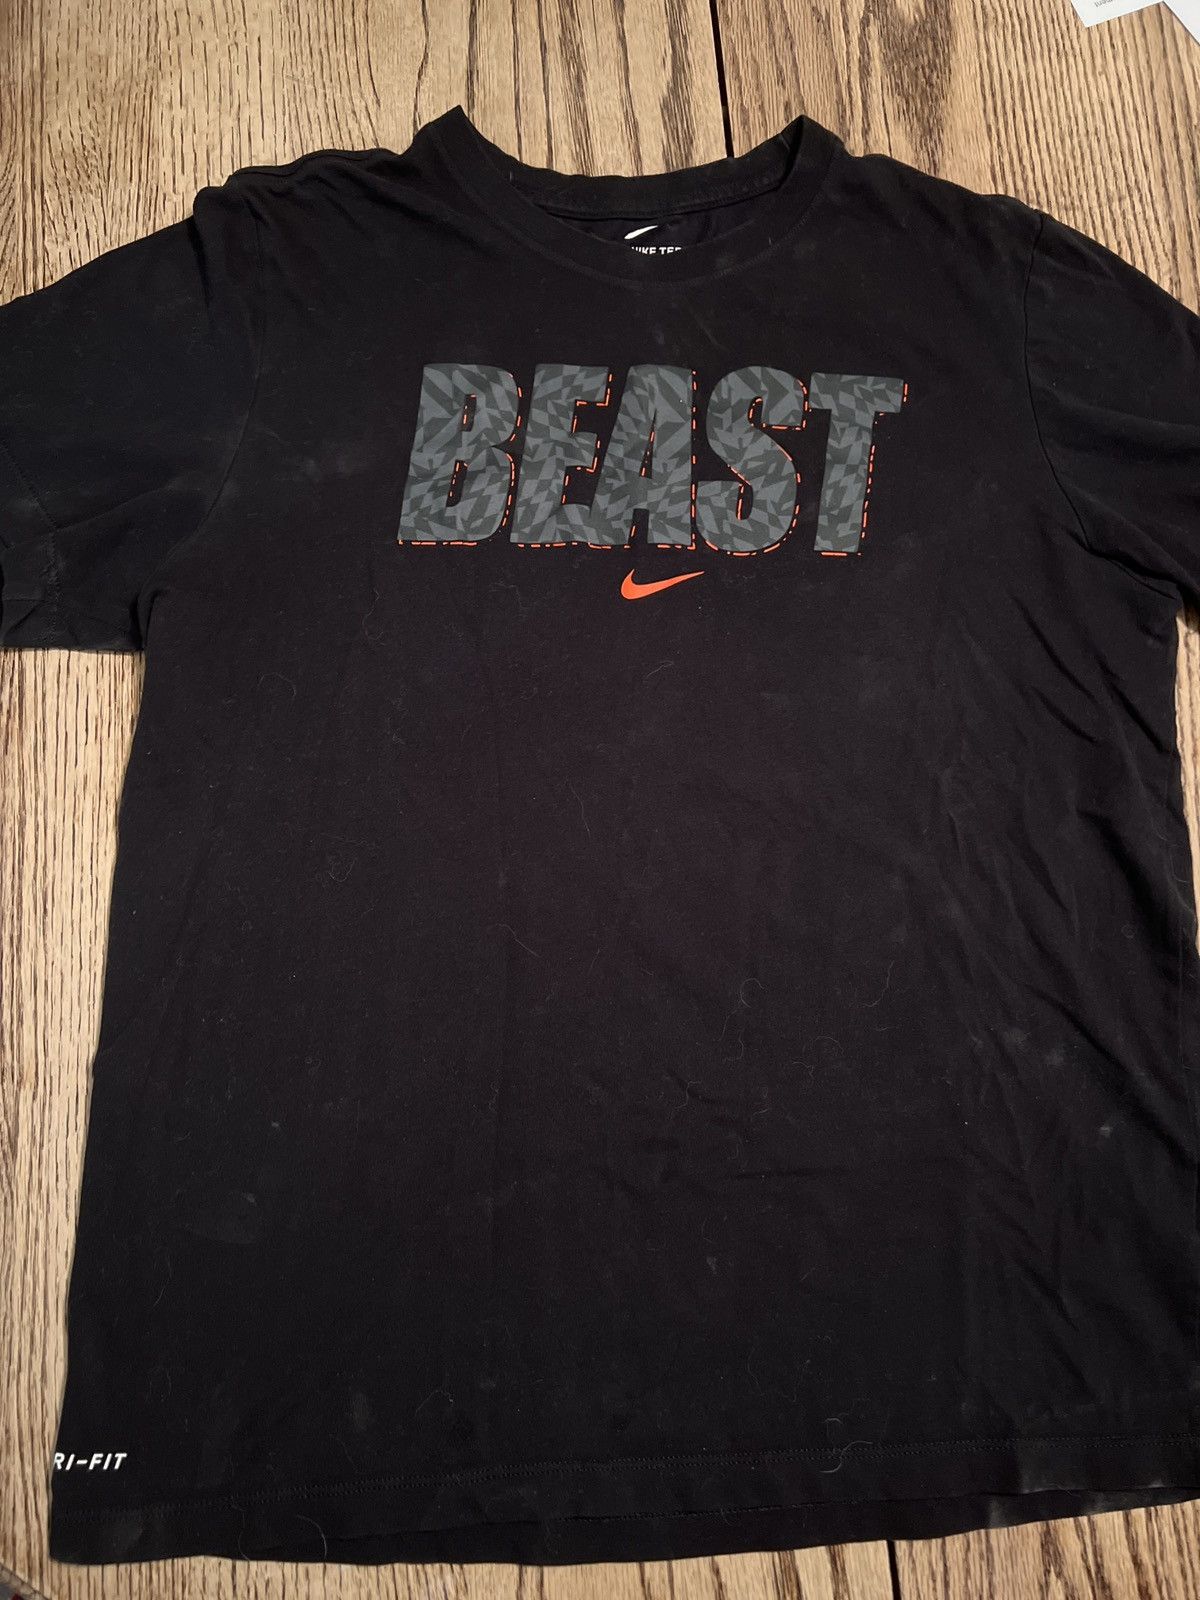 Nike Nike beast shirt Size US L / EU 52-54 / 3 - 1 Preview